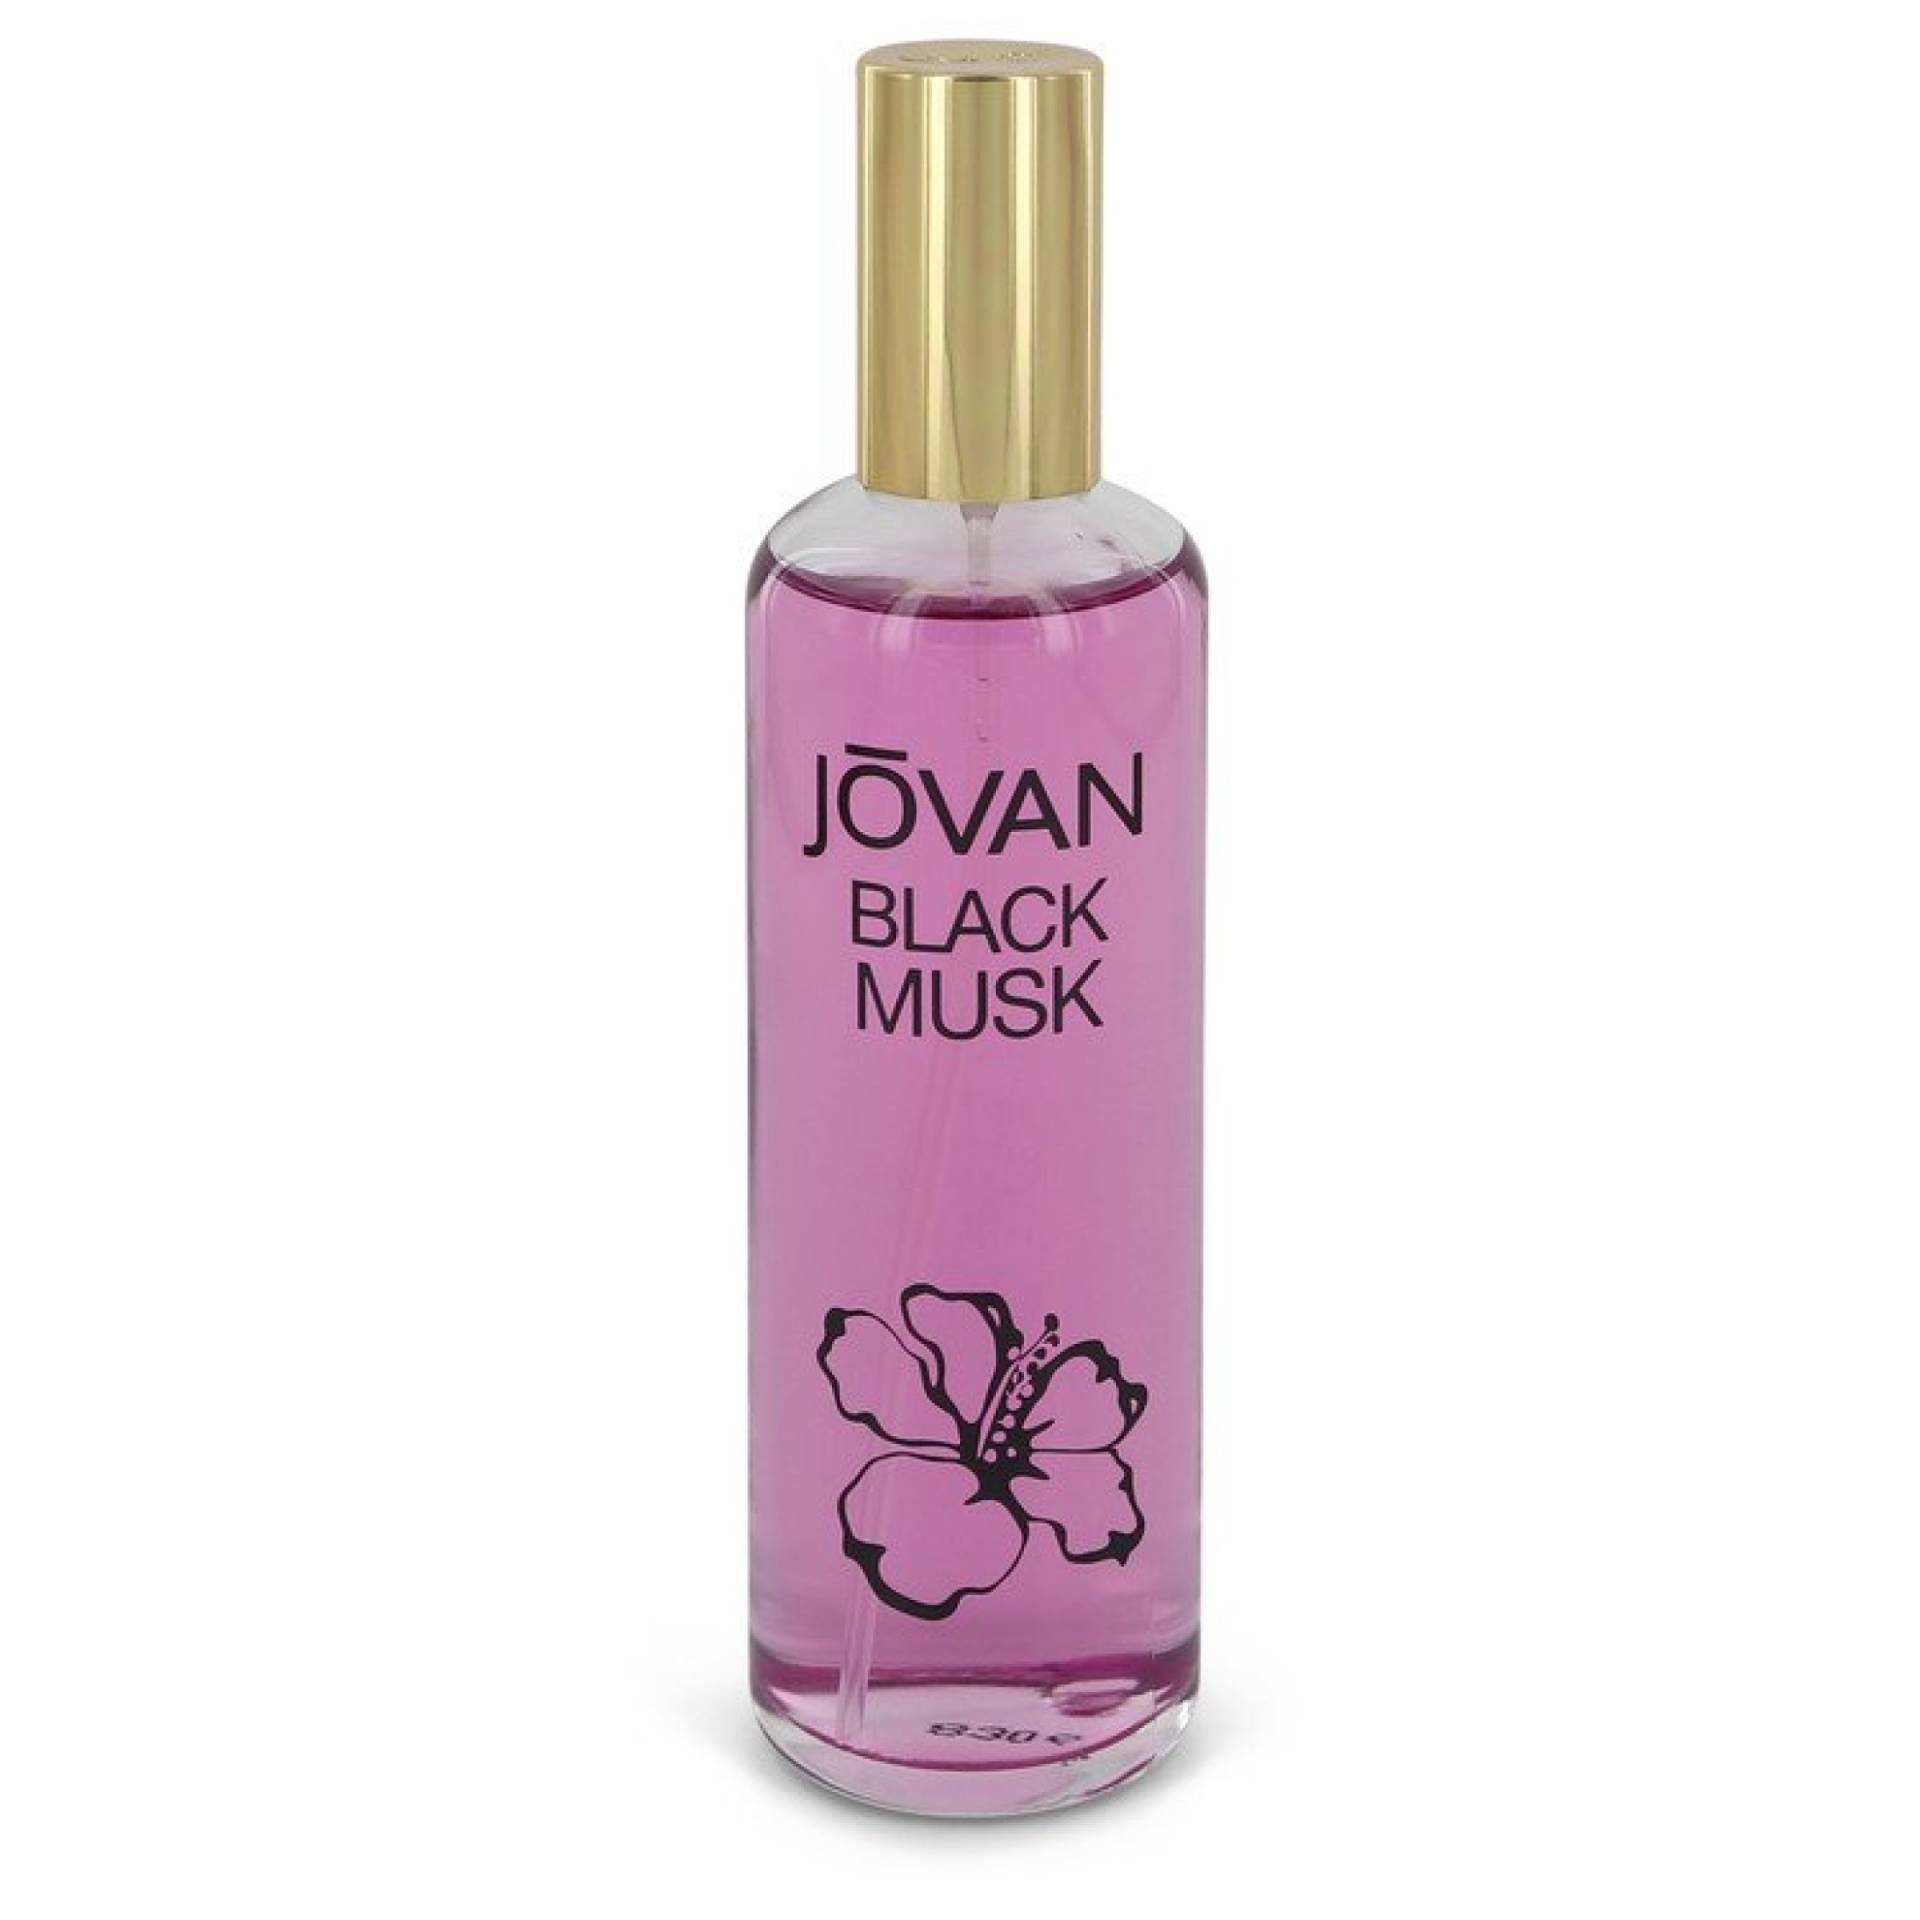 Jovan Black Musk Cologne Concentrate Spray (unboxed) 96 ml von Jovan